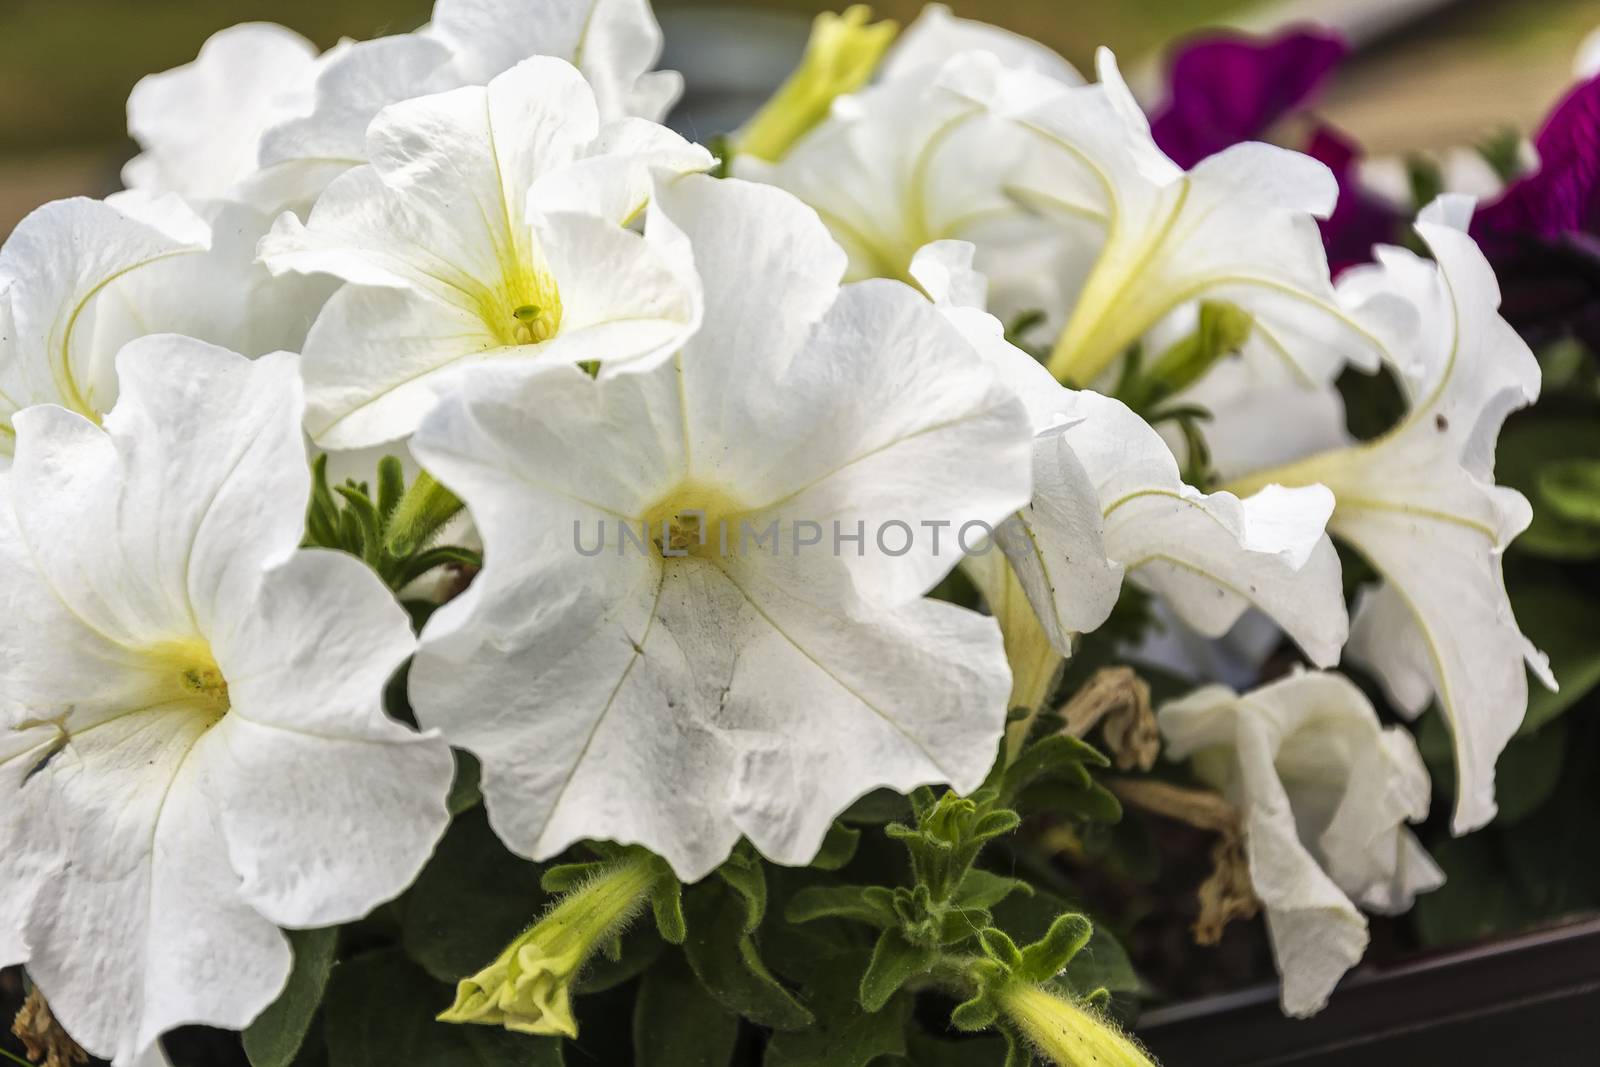 Flowers of white petunia